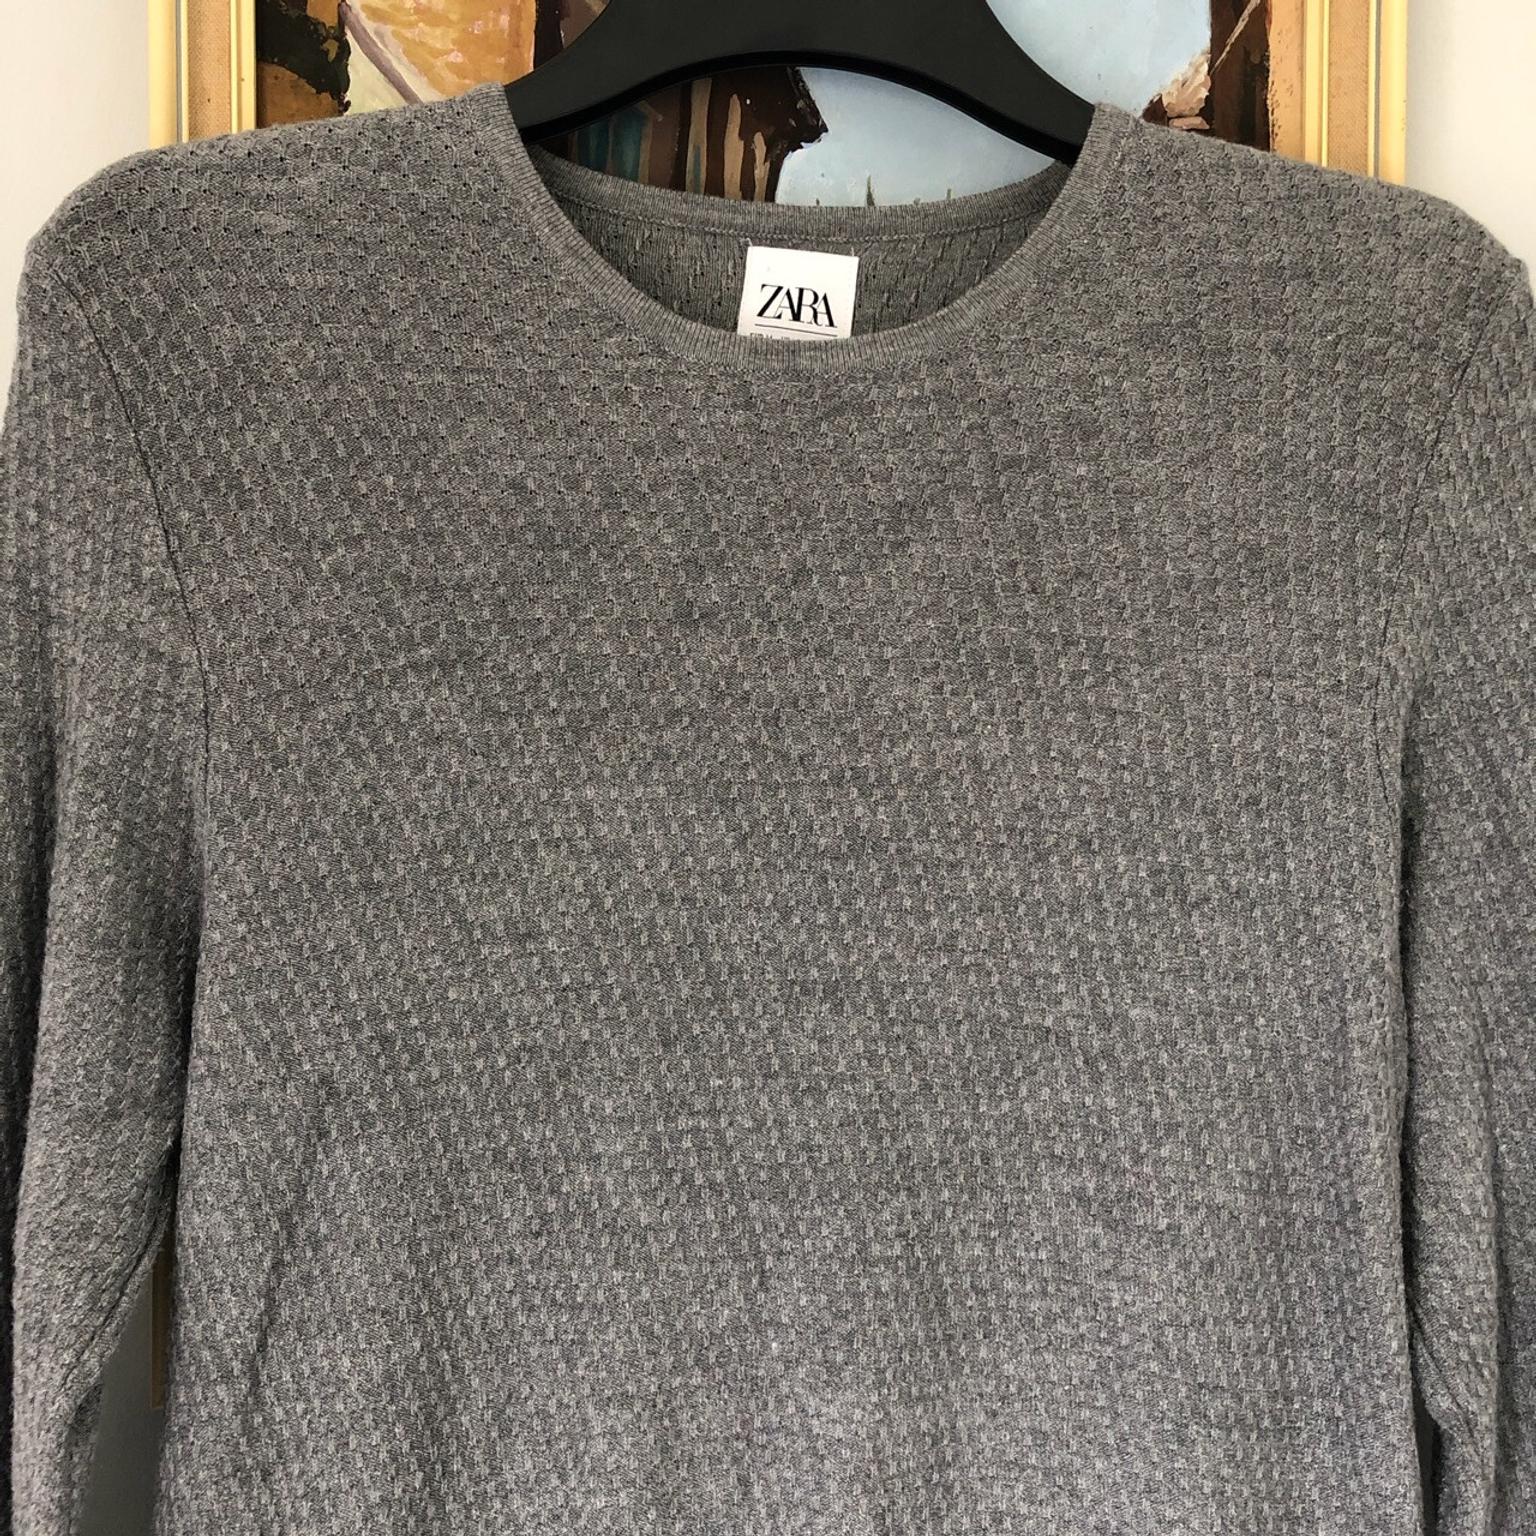 Zara men's grey jumper size medium in 